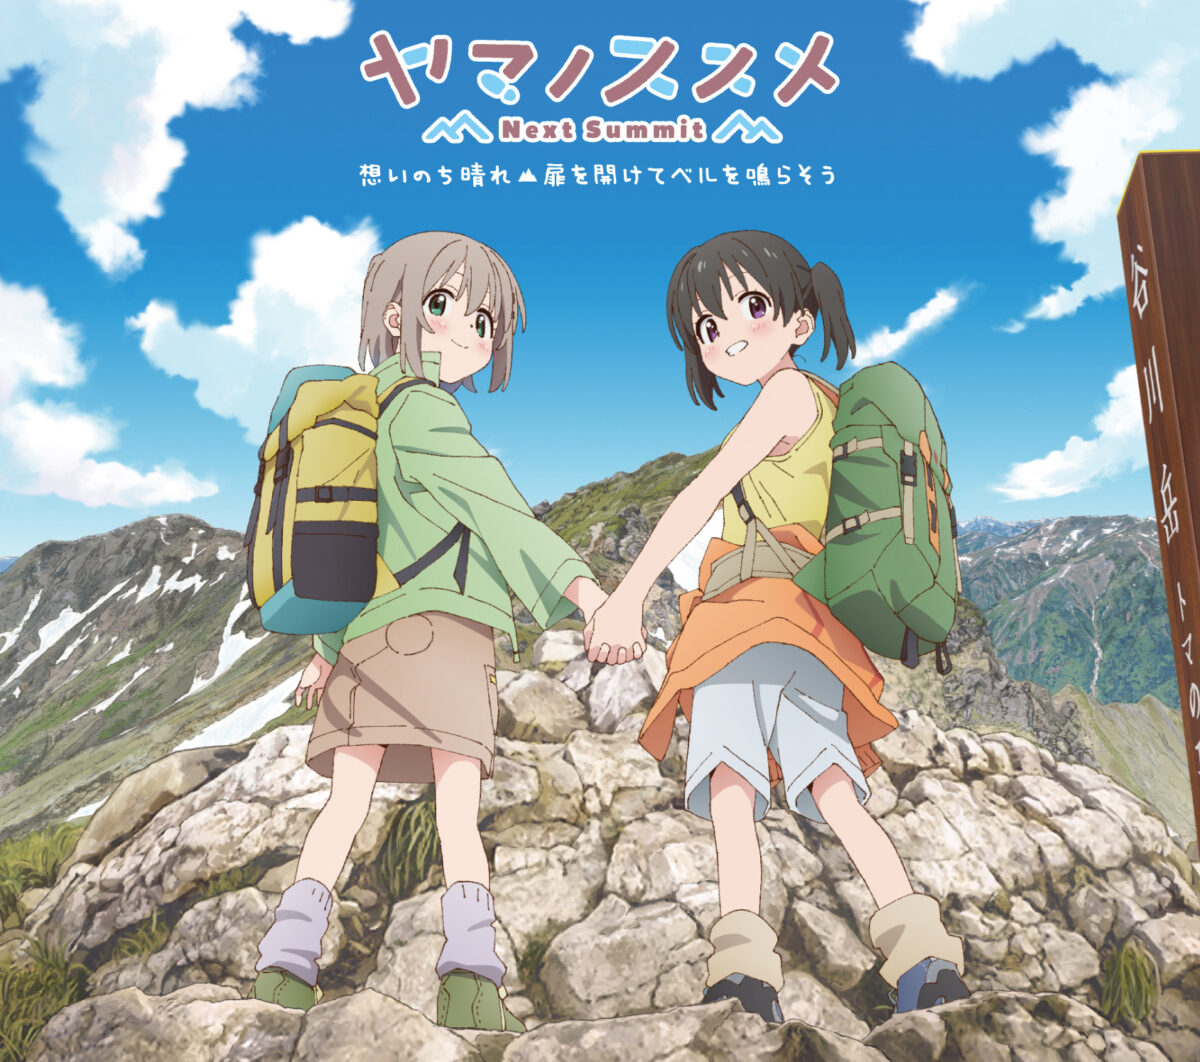 Rewatch] Yama no Susume (Encouragement of Climb) Season 2 Episodes